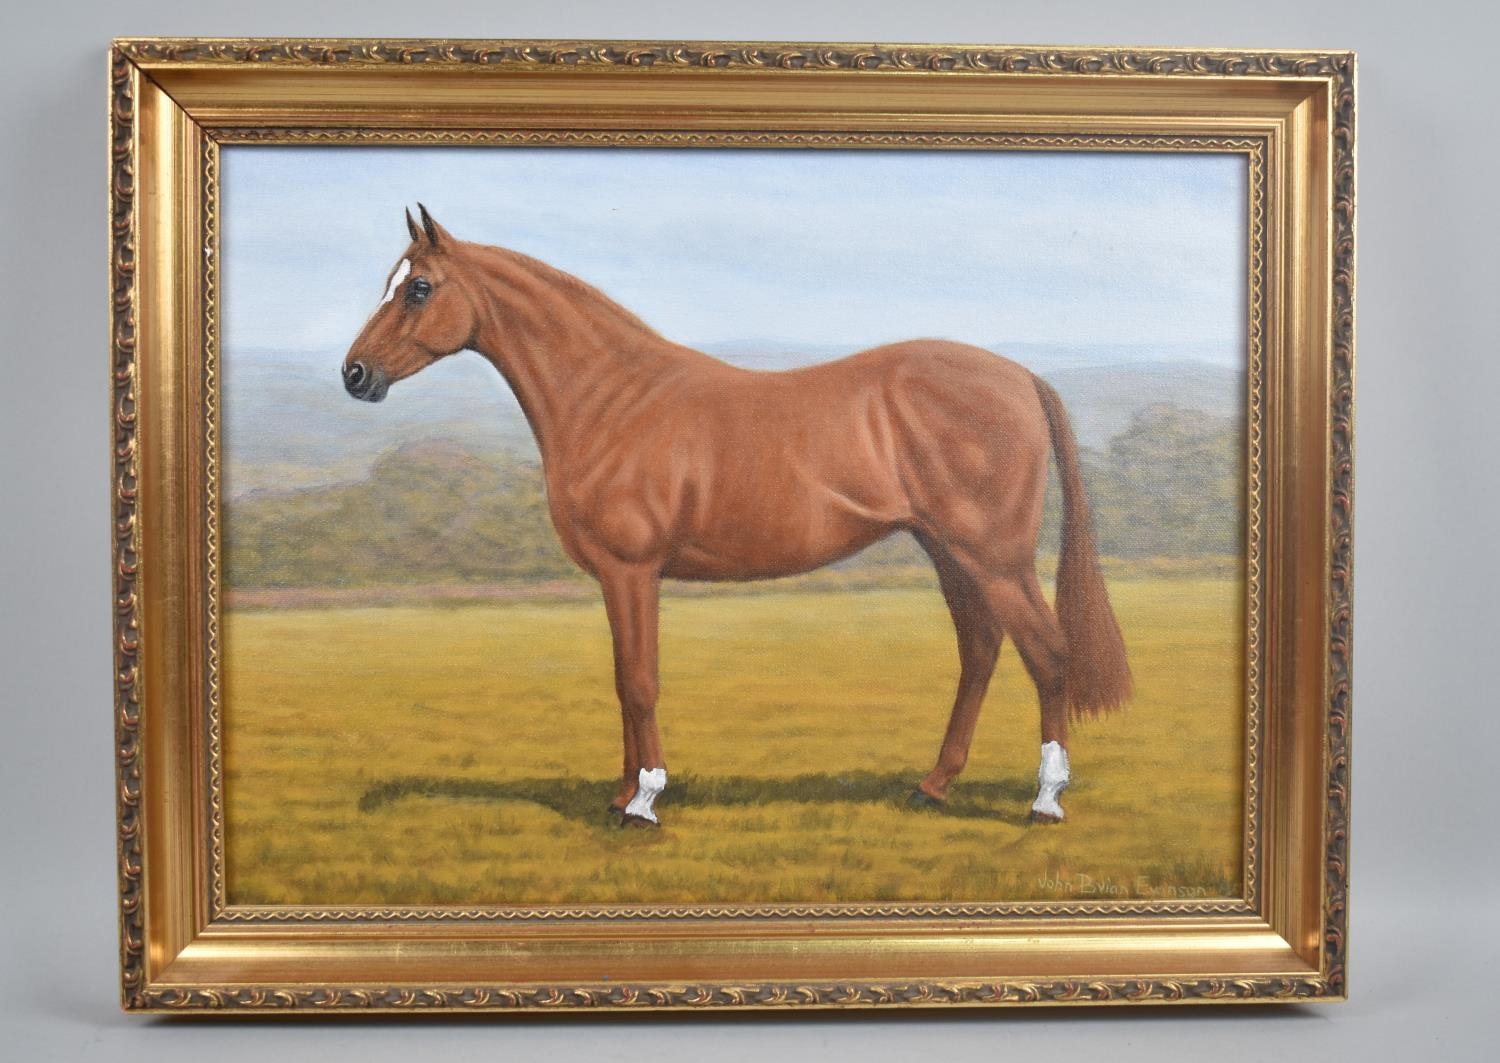 A Framed Oil on Canvas Depicting Chestnut Horse, Signed John Brian Evanson, 39x29cms